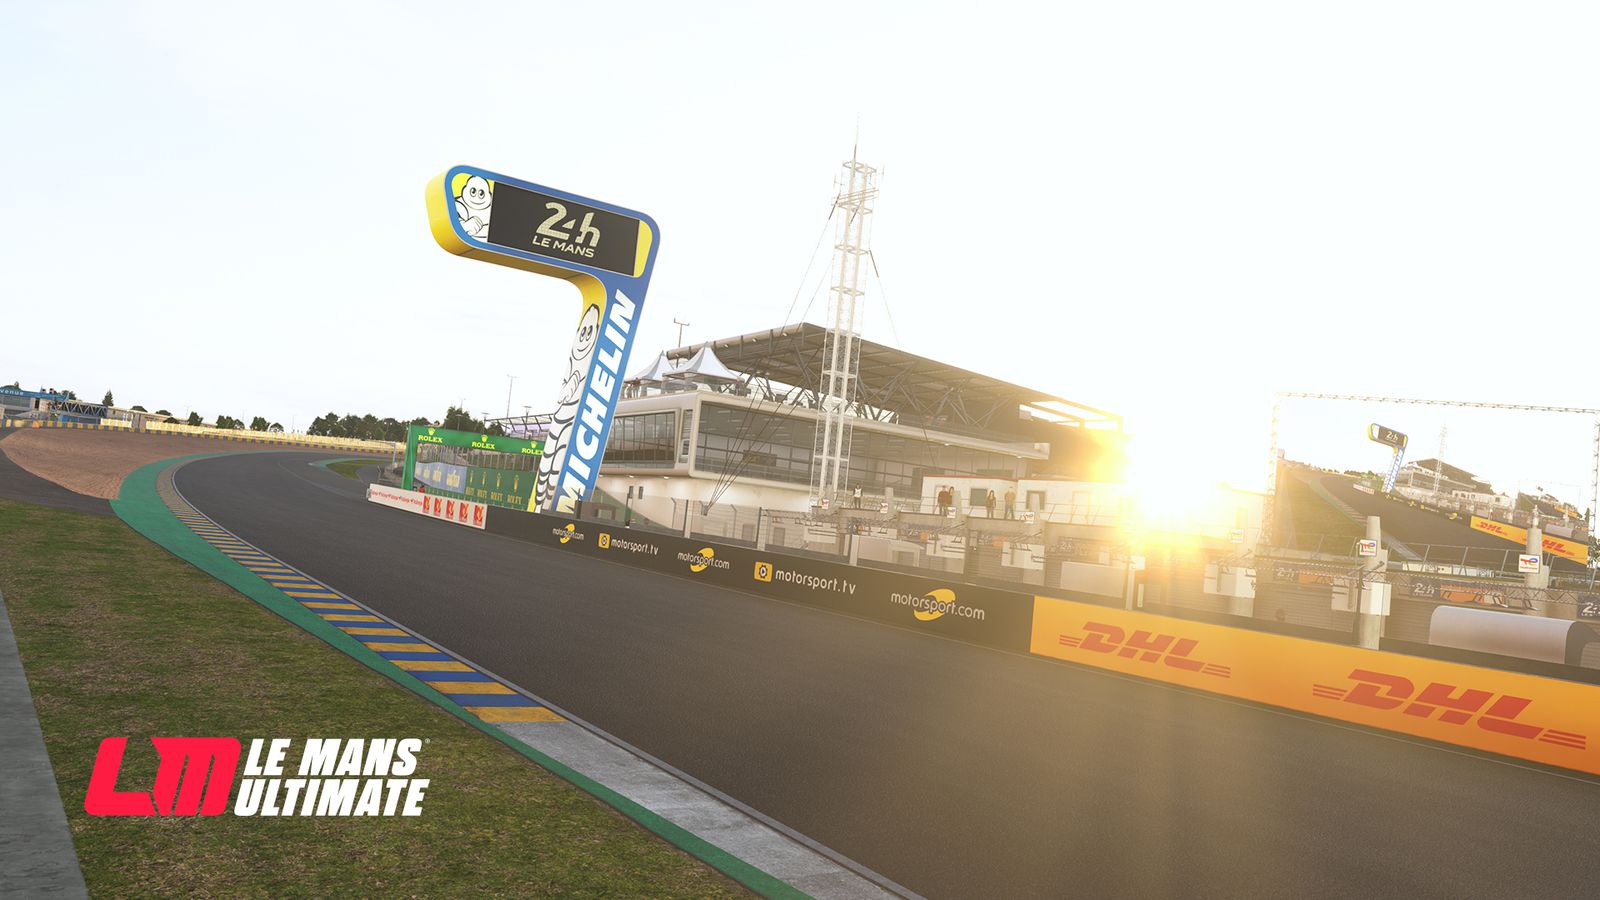 Le Mans Ultimate track screenshot